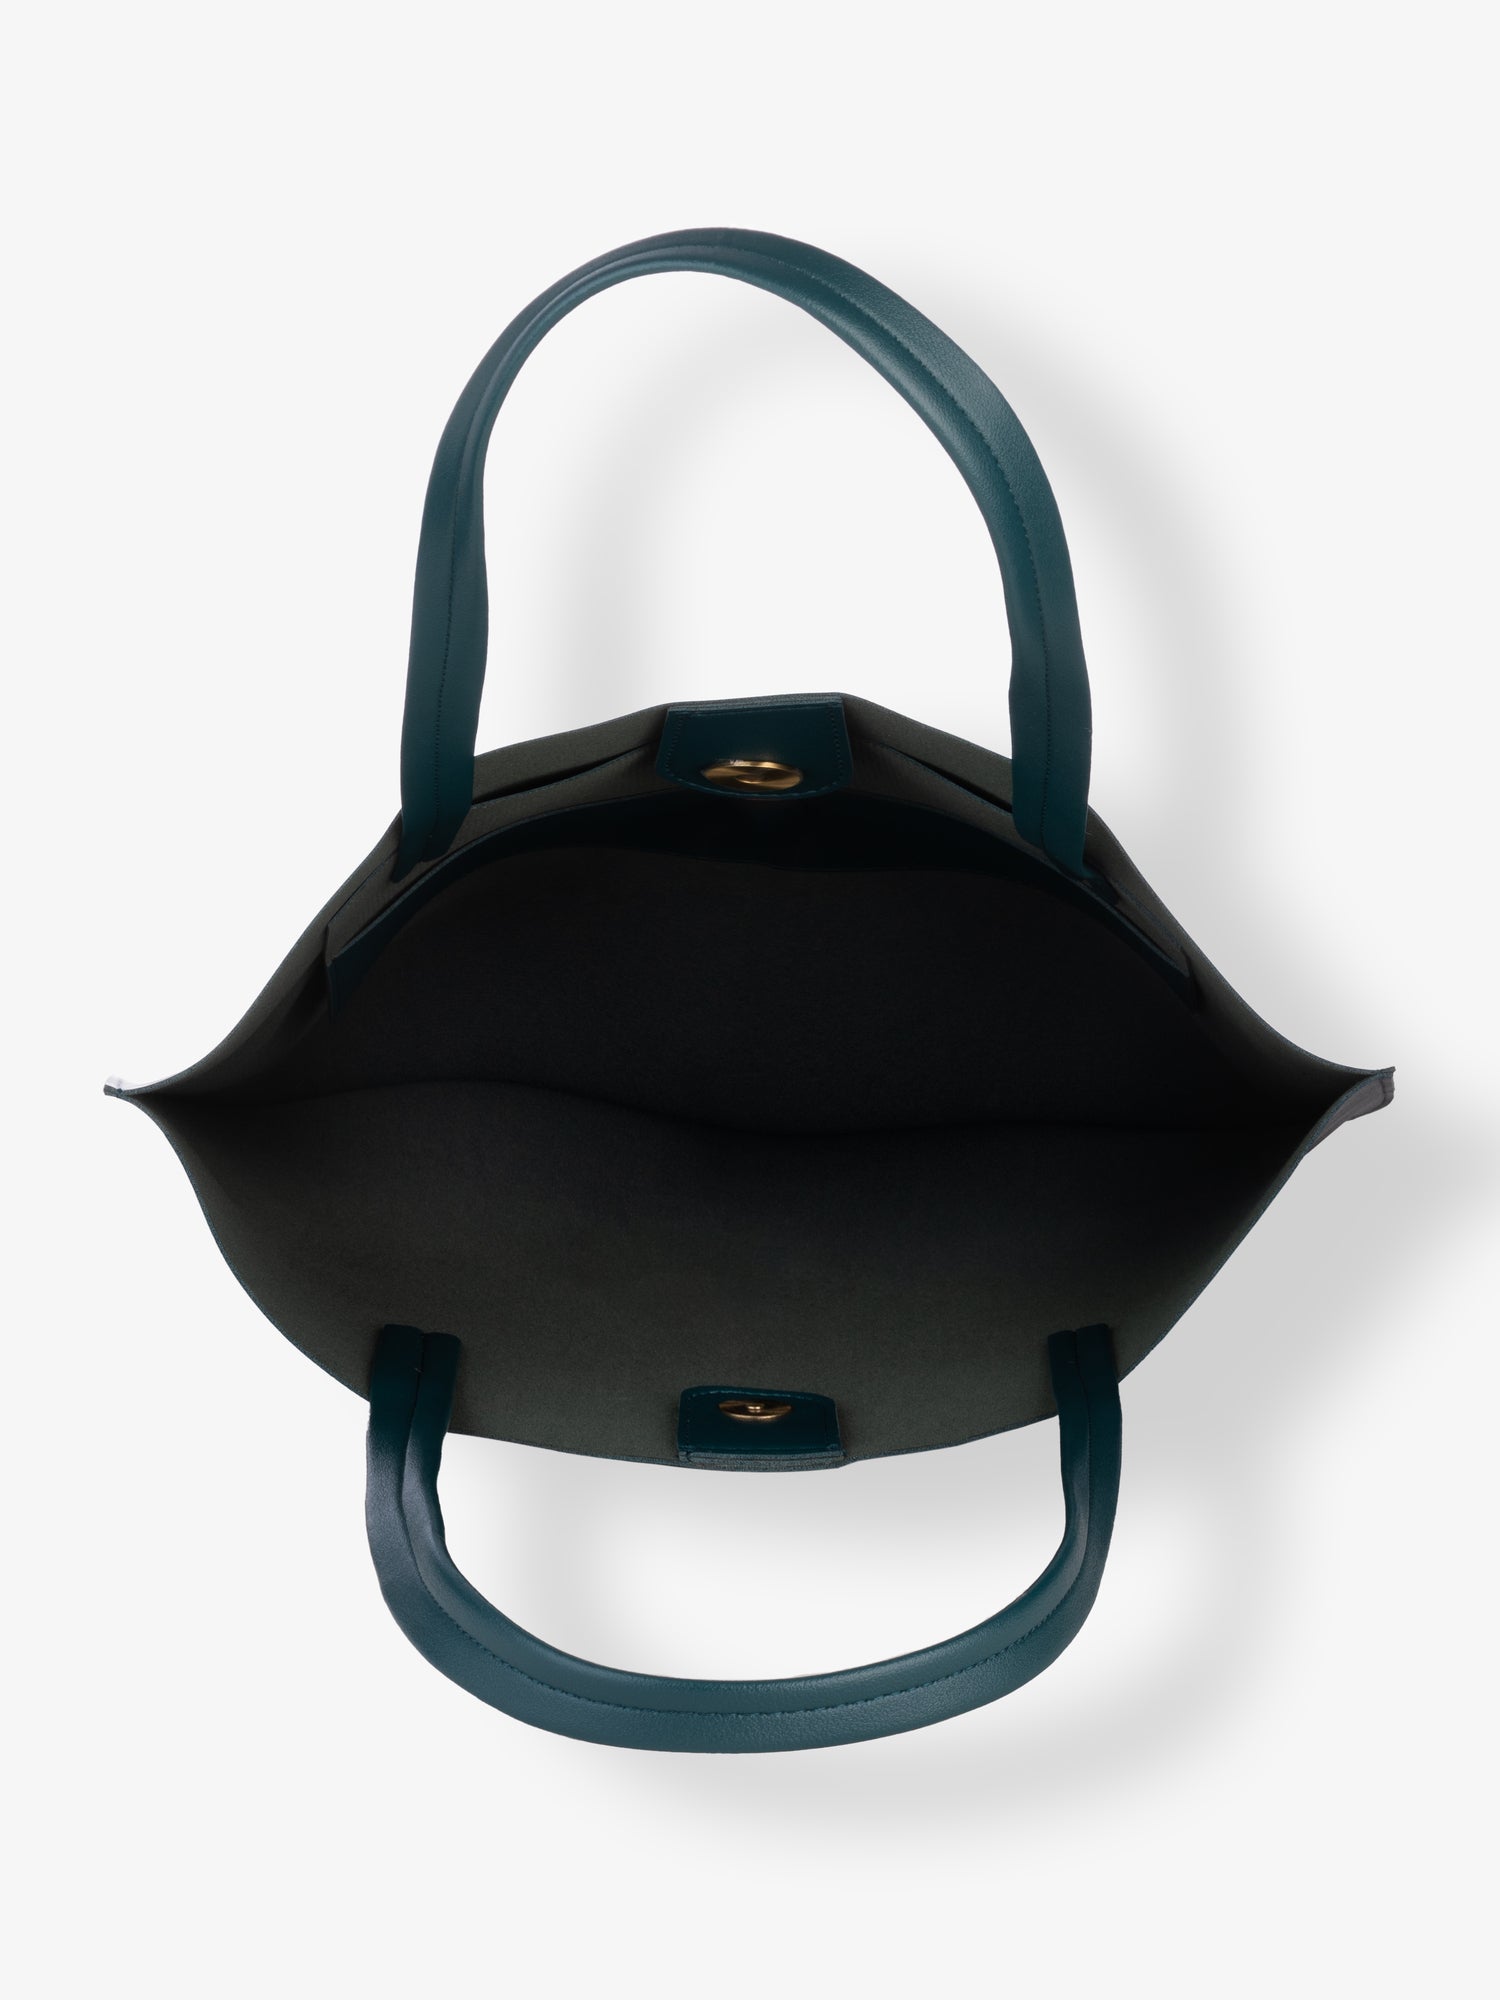 tote handbags for women